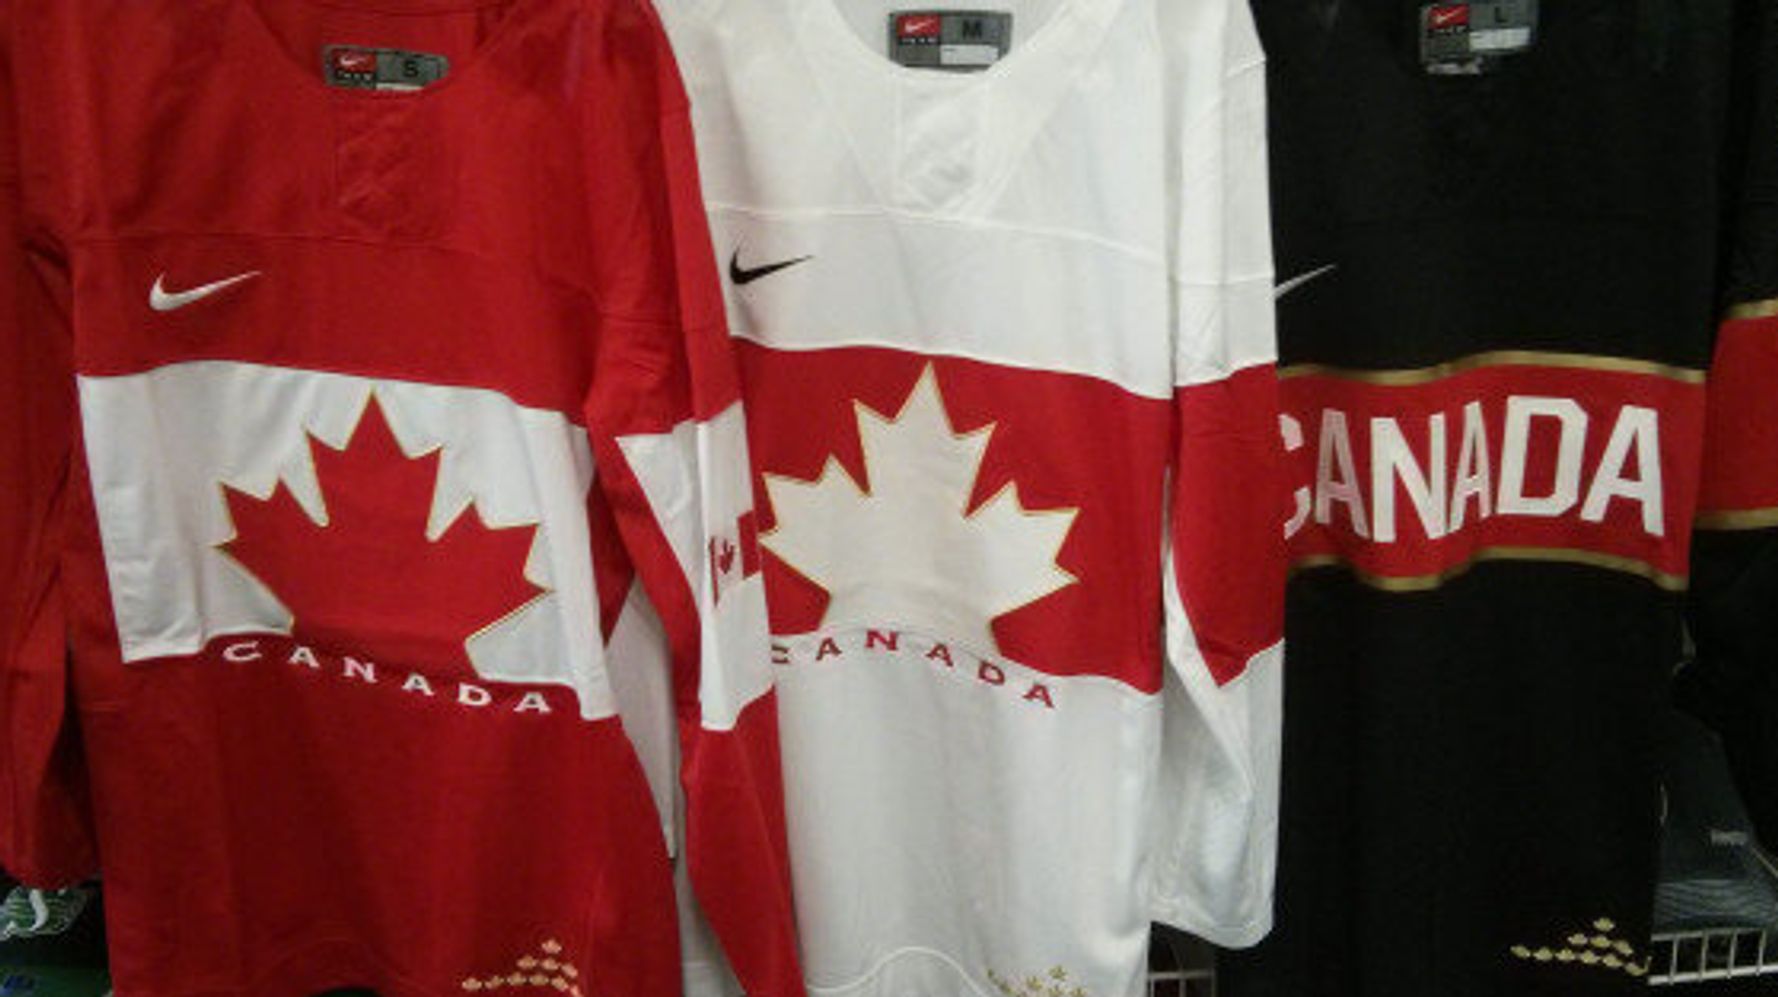 PHOTO: 2014 USA Hockey Olympic Jersey Unveiled